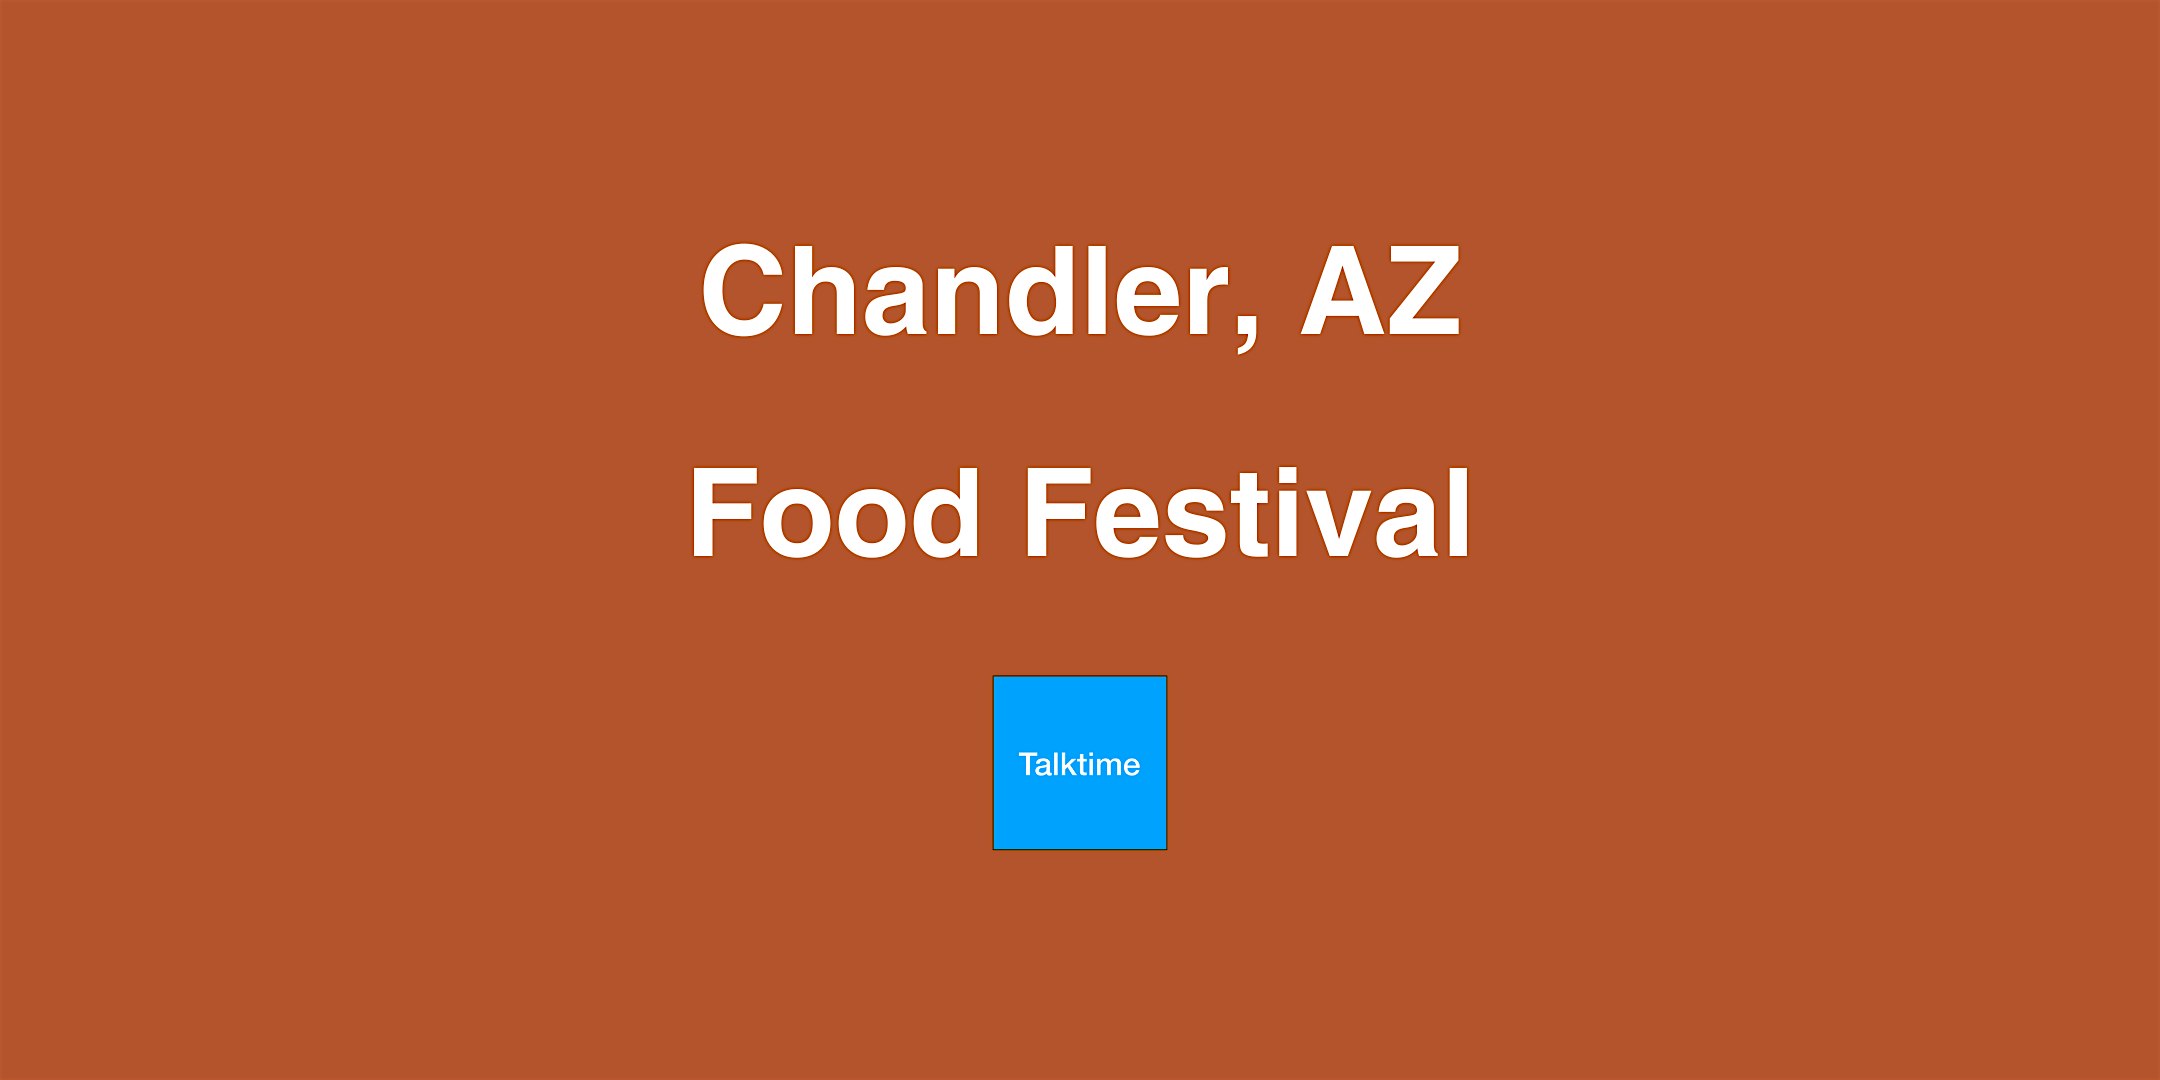 Food Festival - Chandler